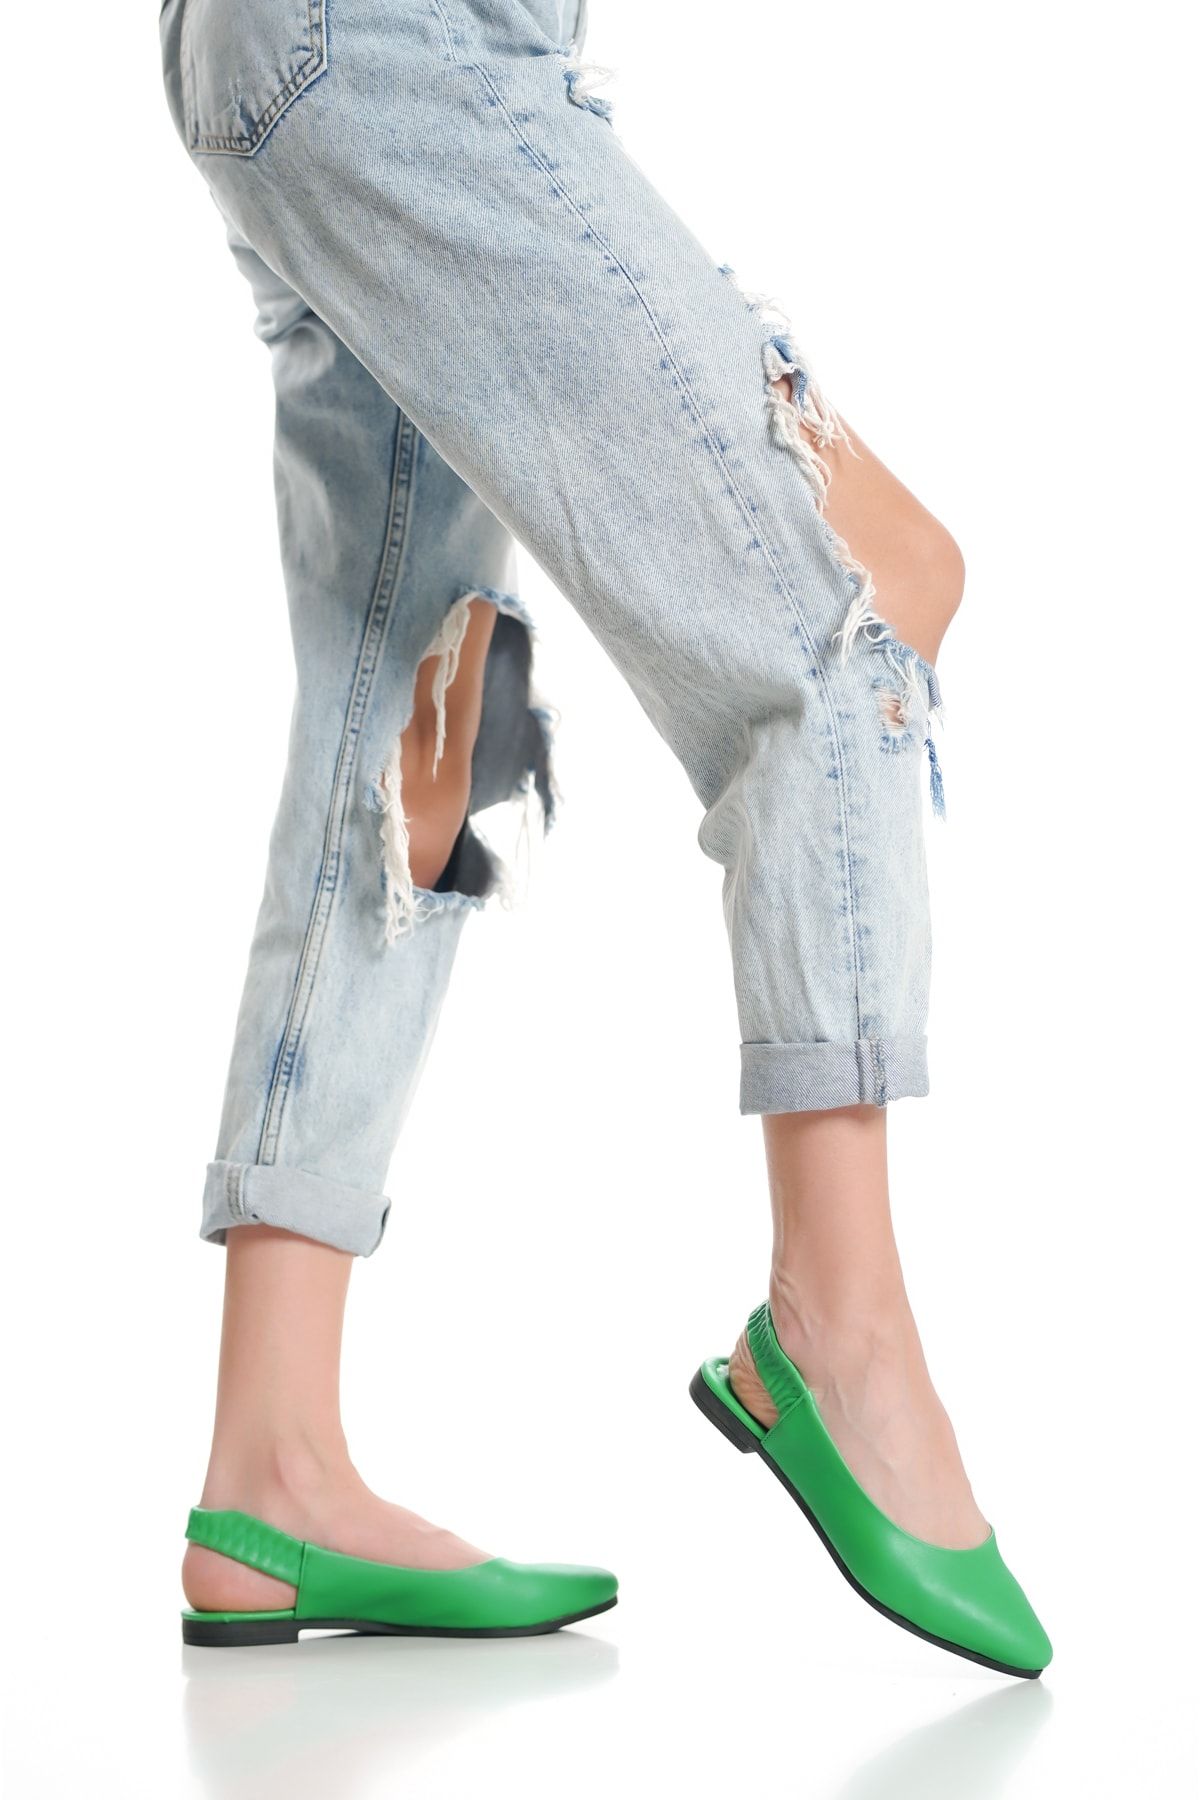 MORIA Shoes Pinky Babet Arka Lastikli Renk Yeşil Materyal Vegan/cilt Yumuşak Comfort Topuk 2 Cm